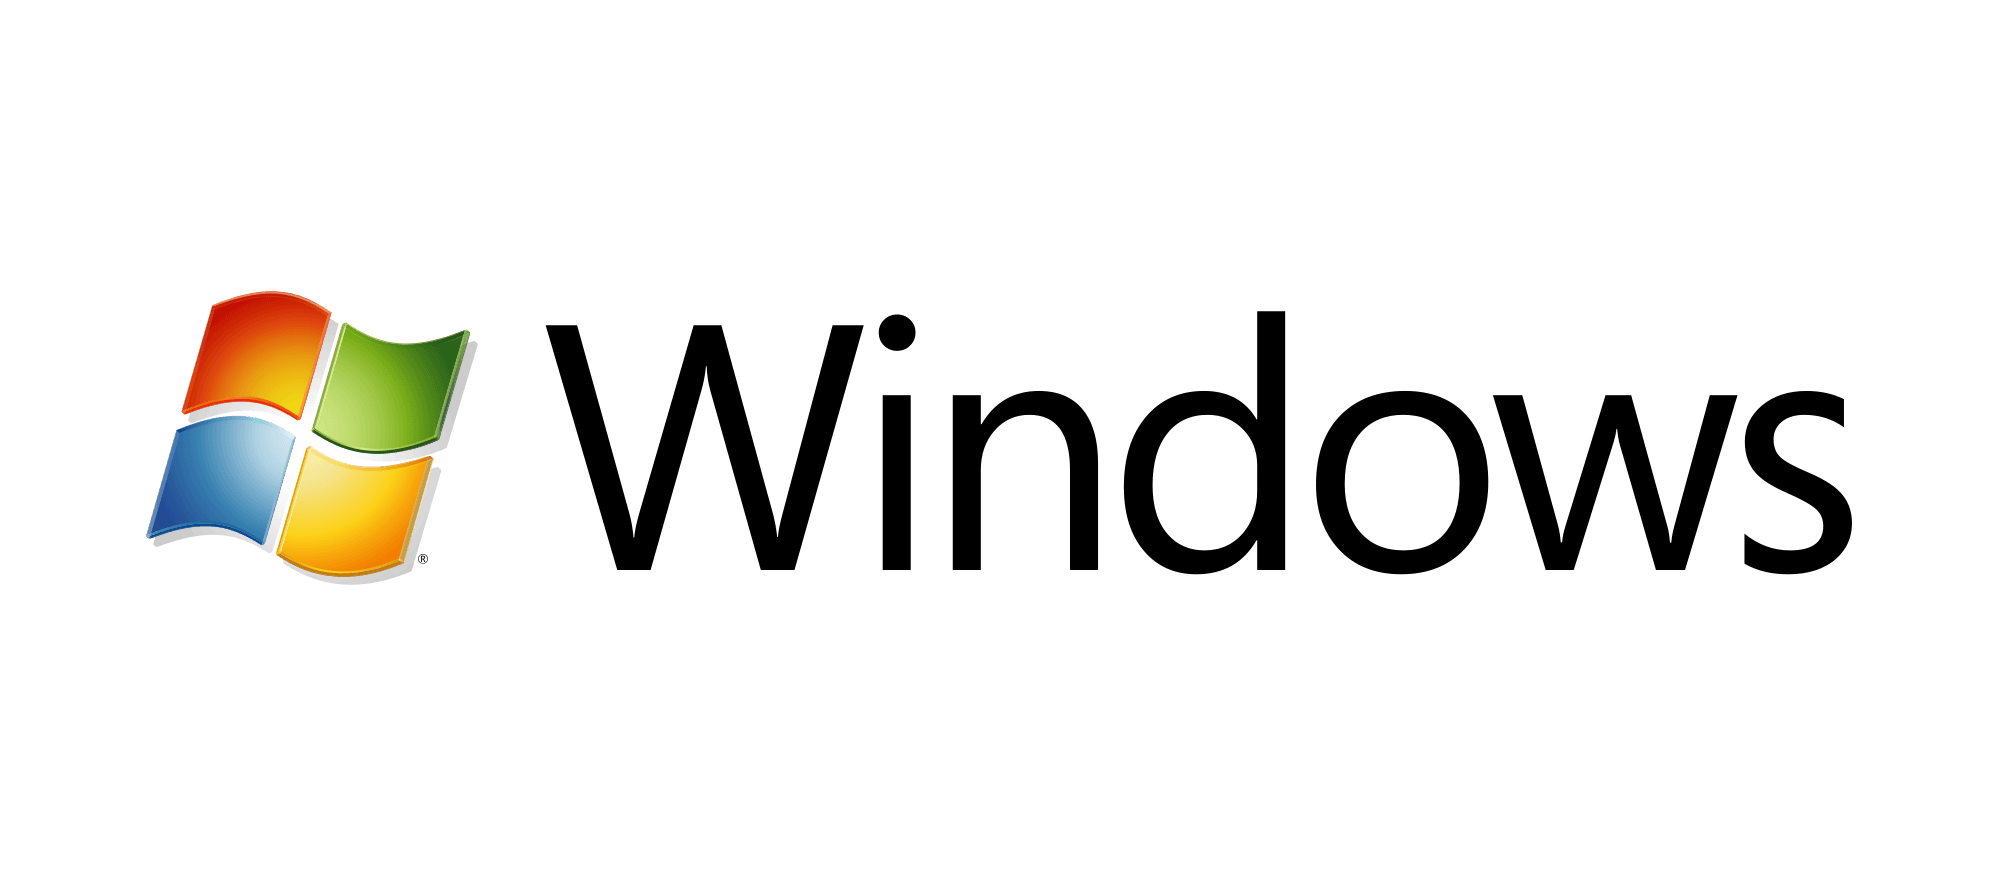 Current Microsoft Logo - Windows logo | Logok